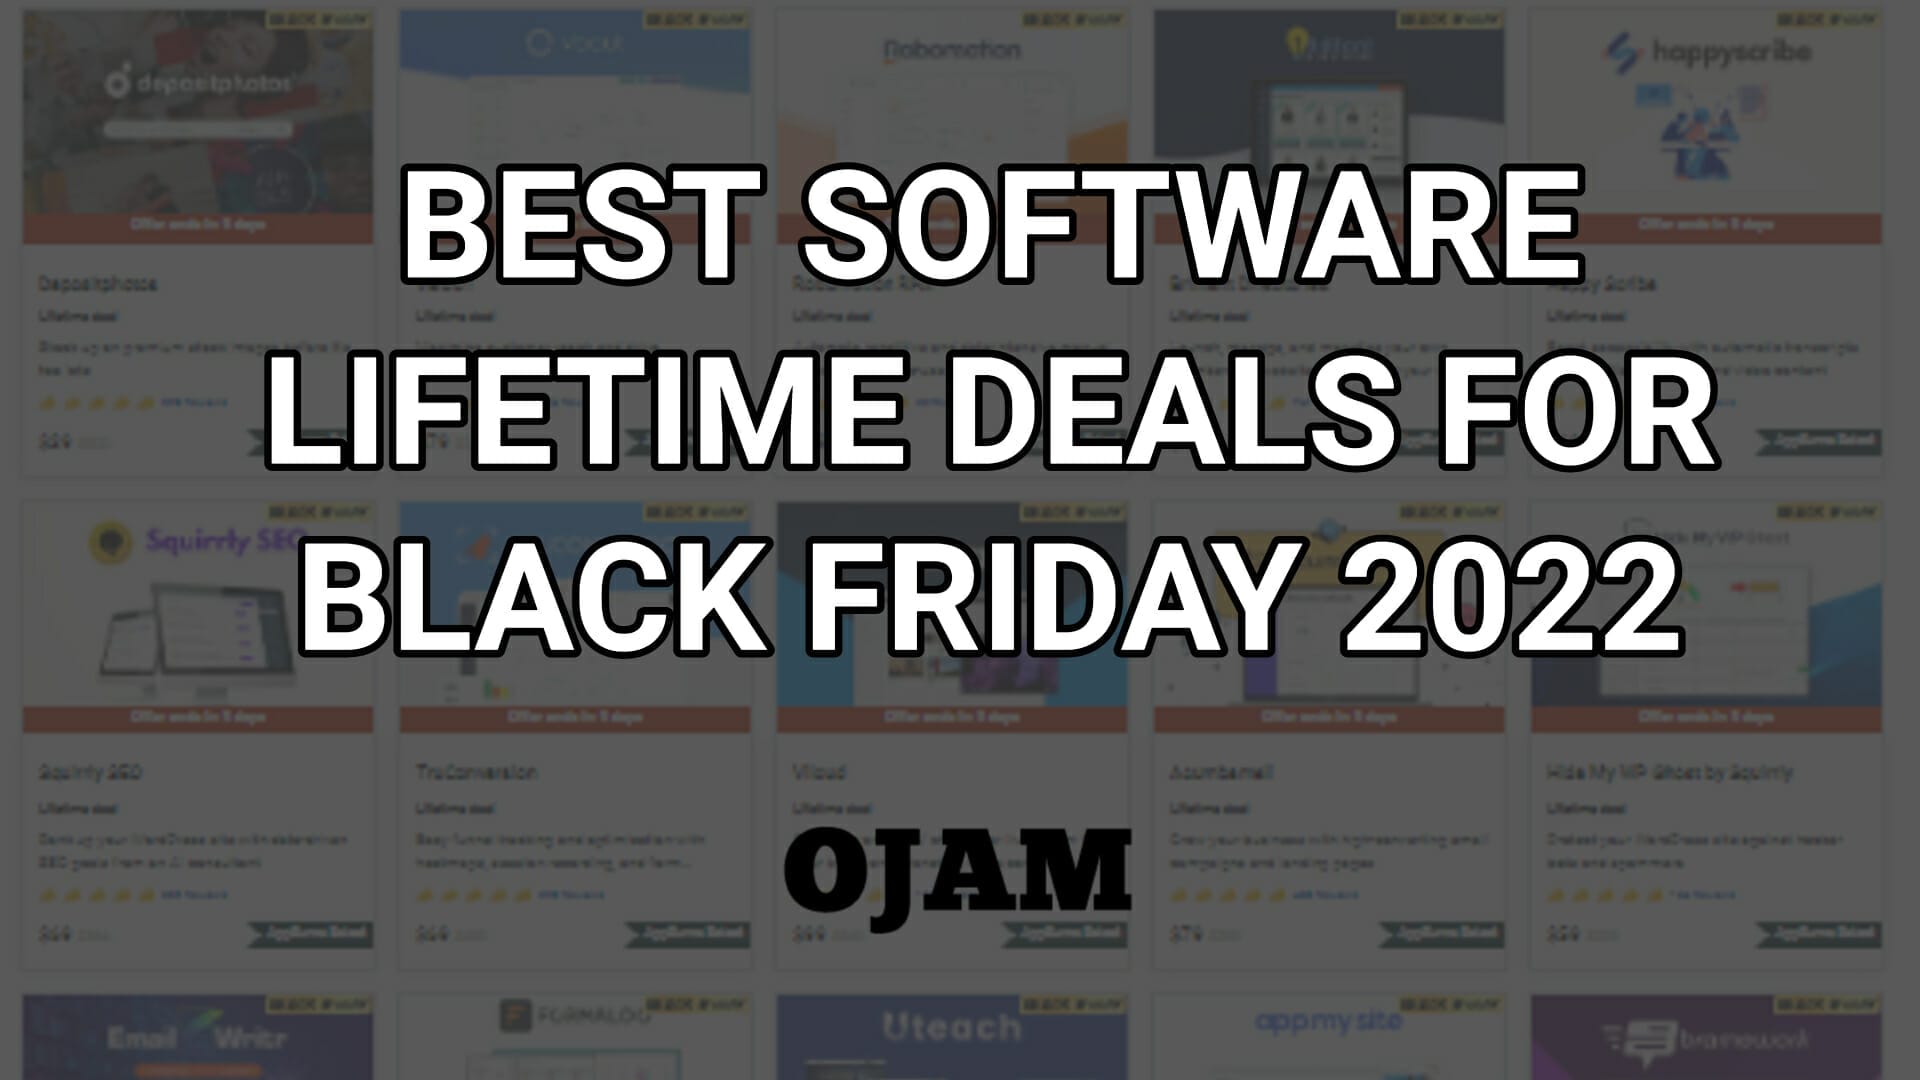 OJAM Online Shopping BEST SOFTWARE LIFETIME DEALS FOR BLACK FRIDAY 2022